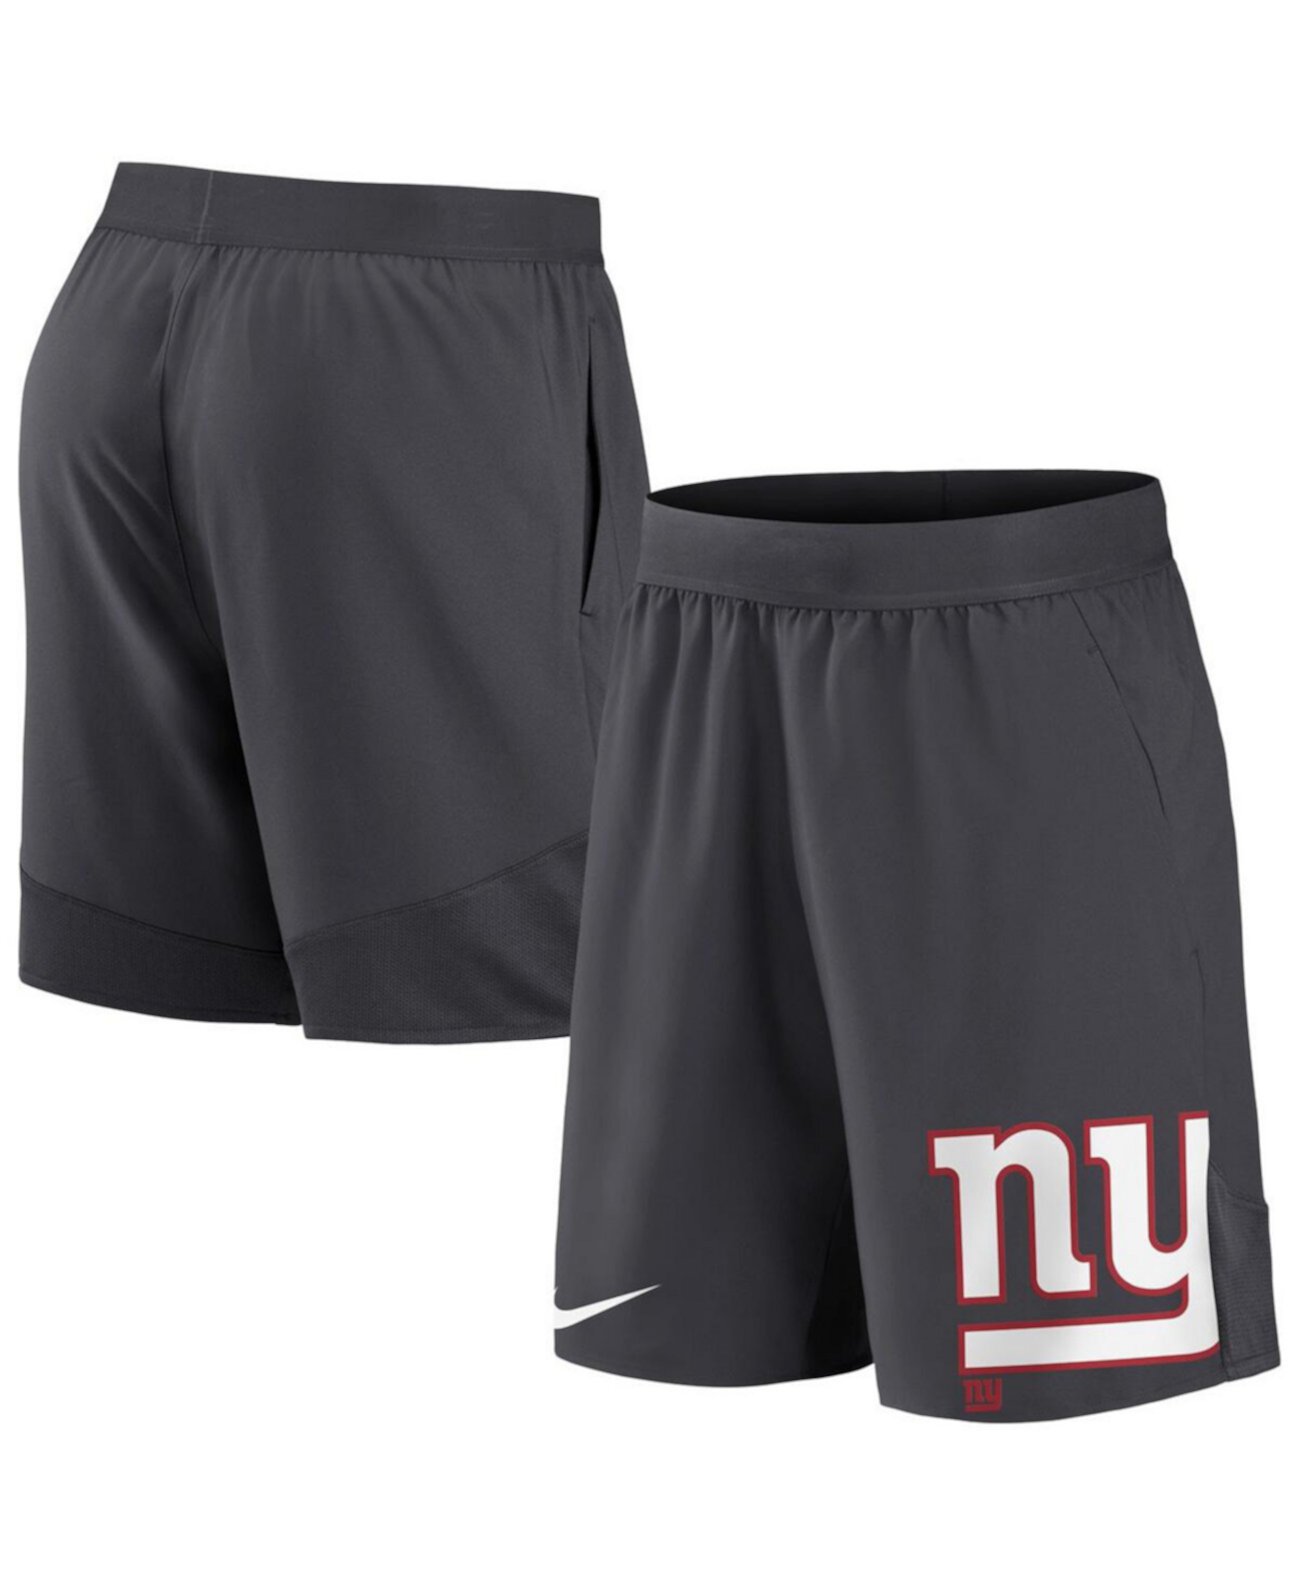 Мужские эластичные шорты антрацитового цвета New York Giants Nike